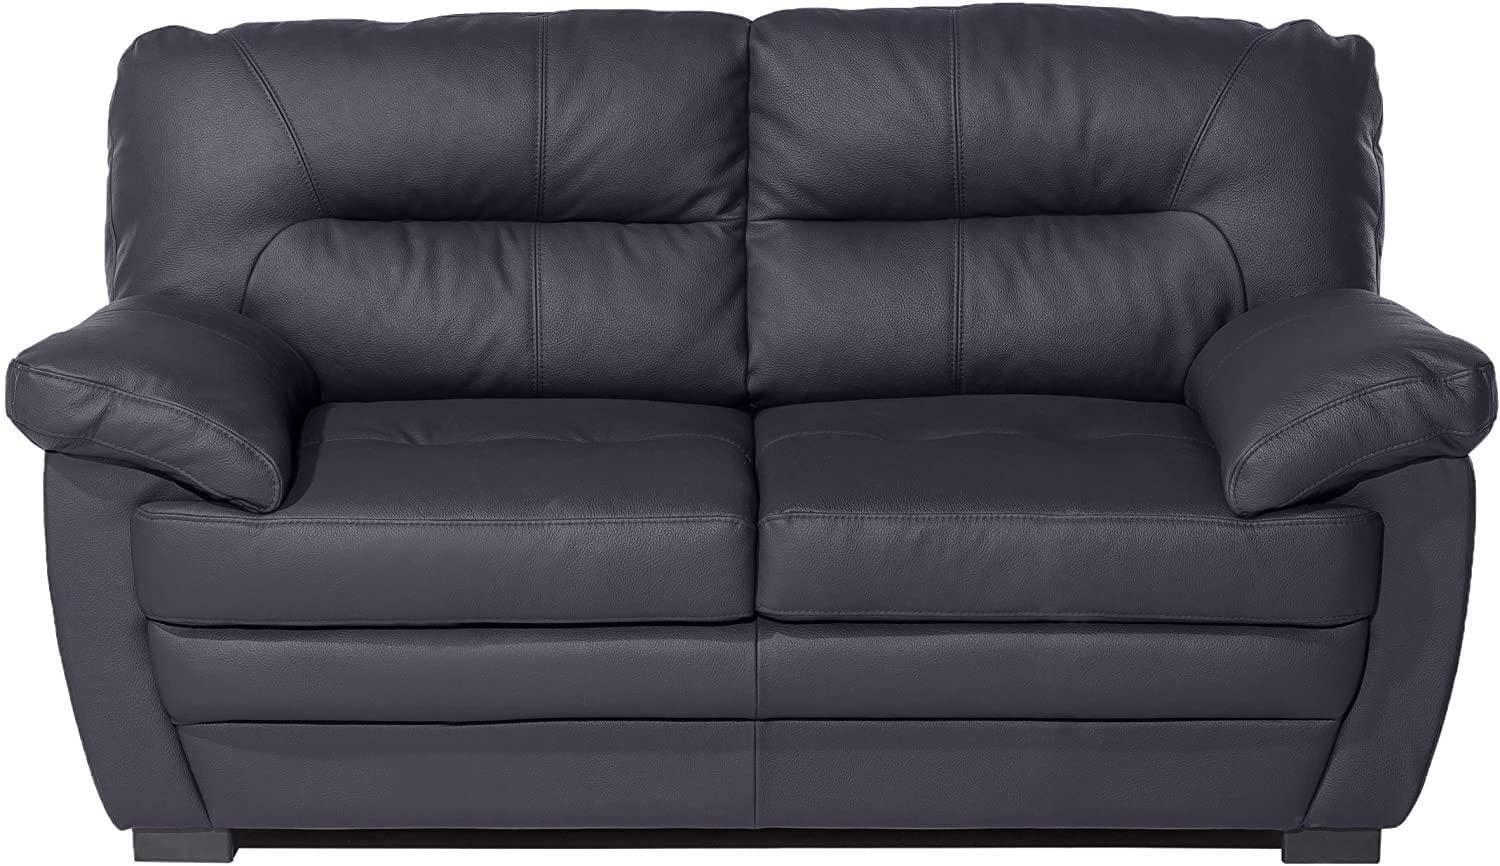 Mivano 2er-Sofa Royale / Zeitloses, bequemes Ledersofa mit hoher Rückenlehne / 160 x 86 x 90 / Lederimitat, Schwarz Bild 1